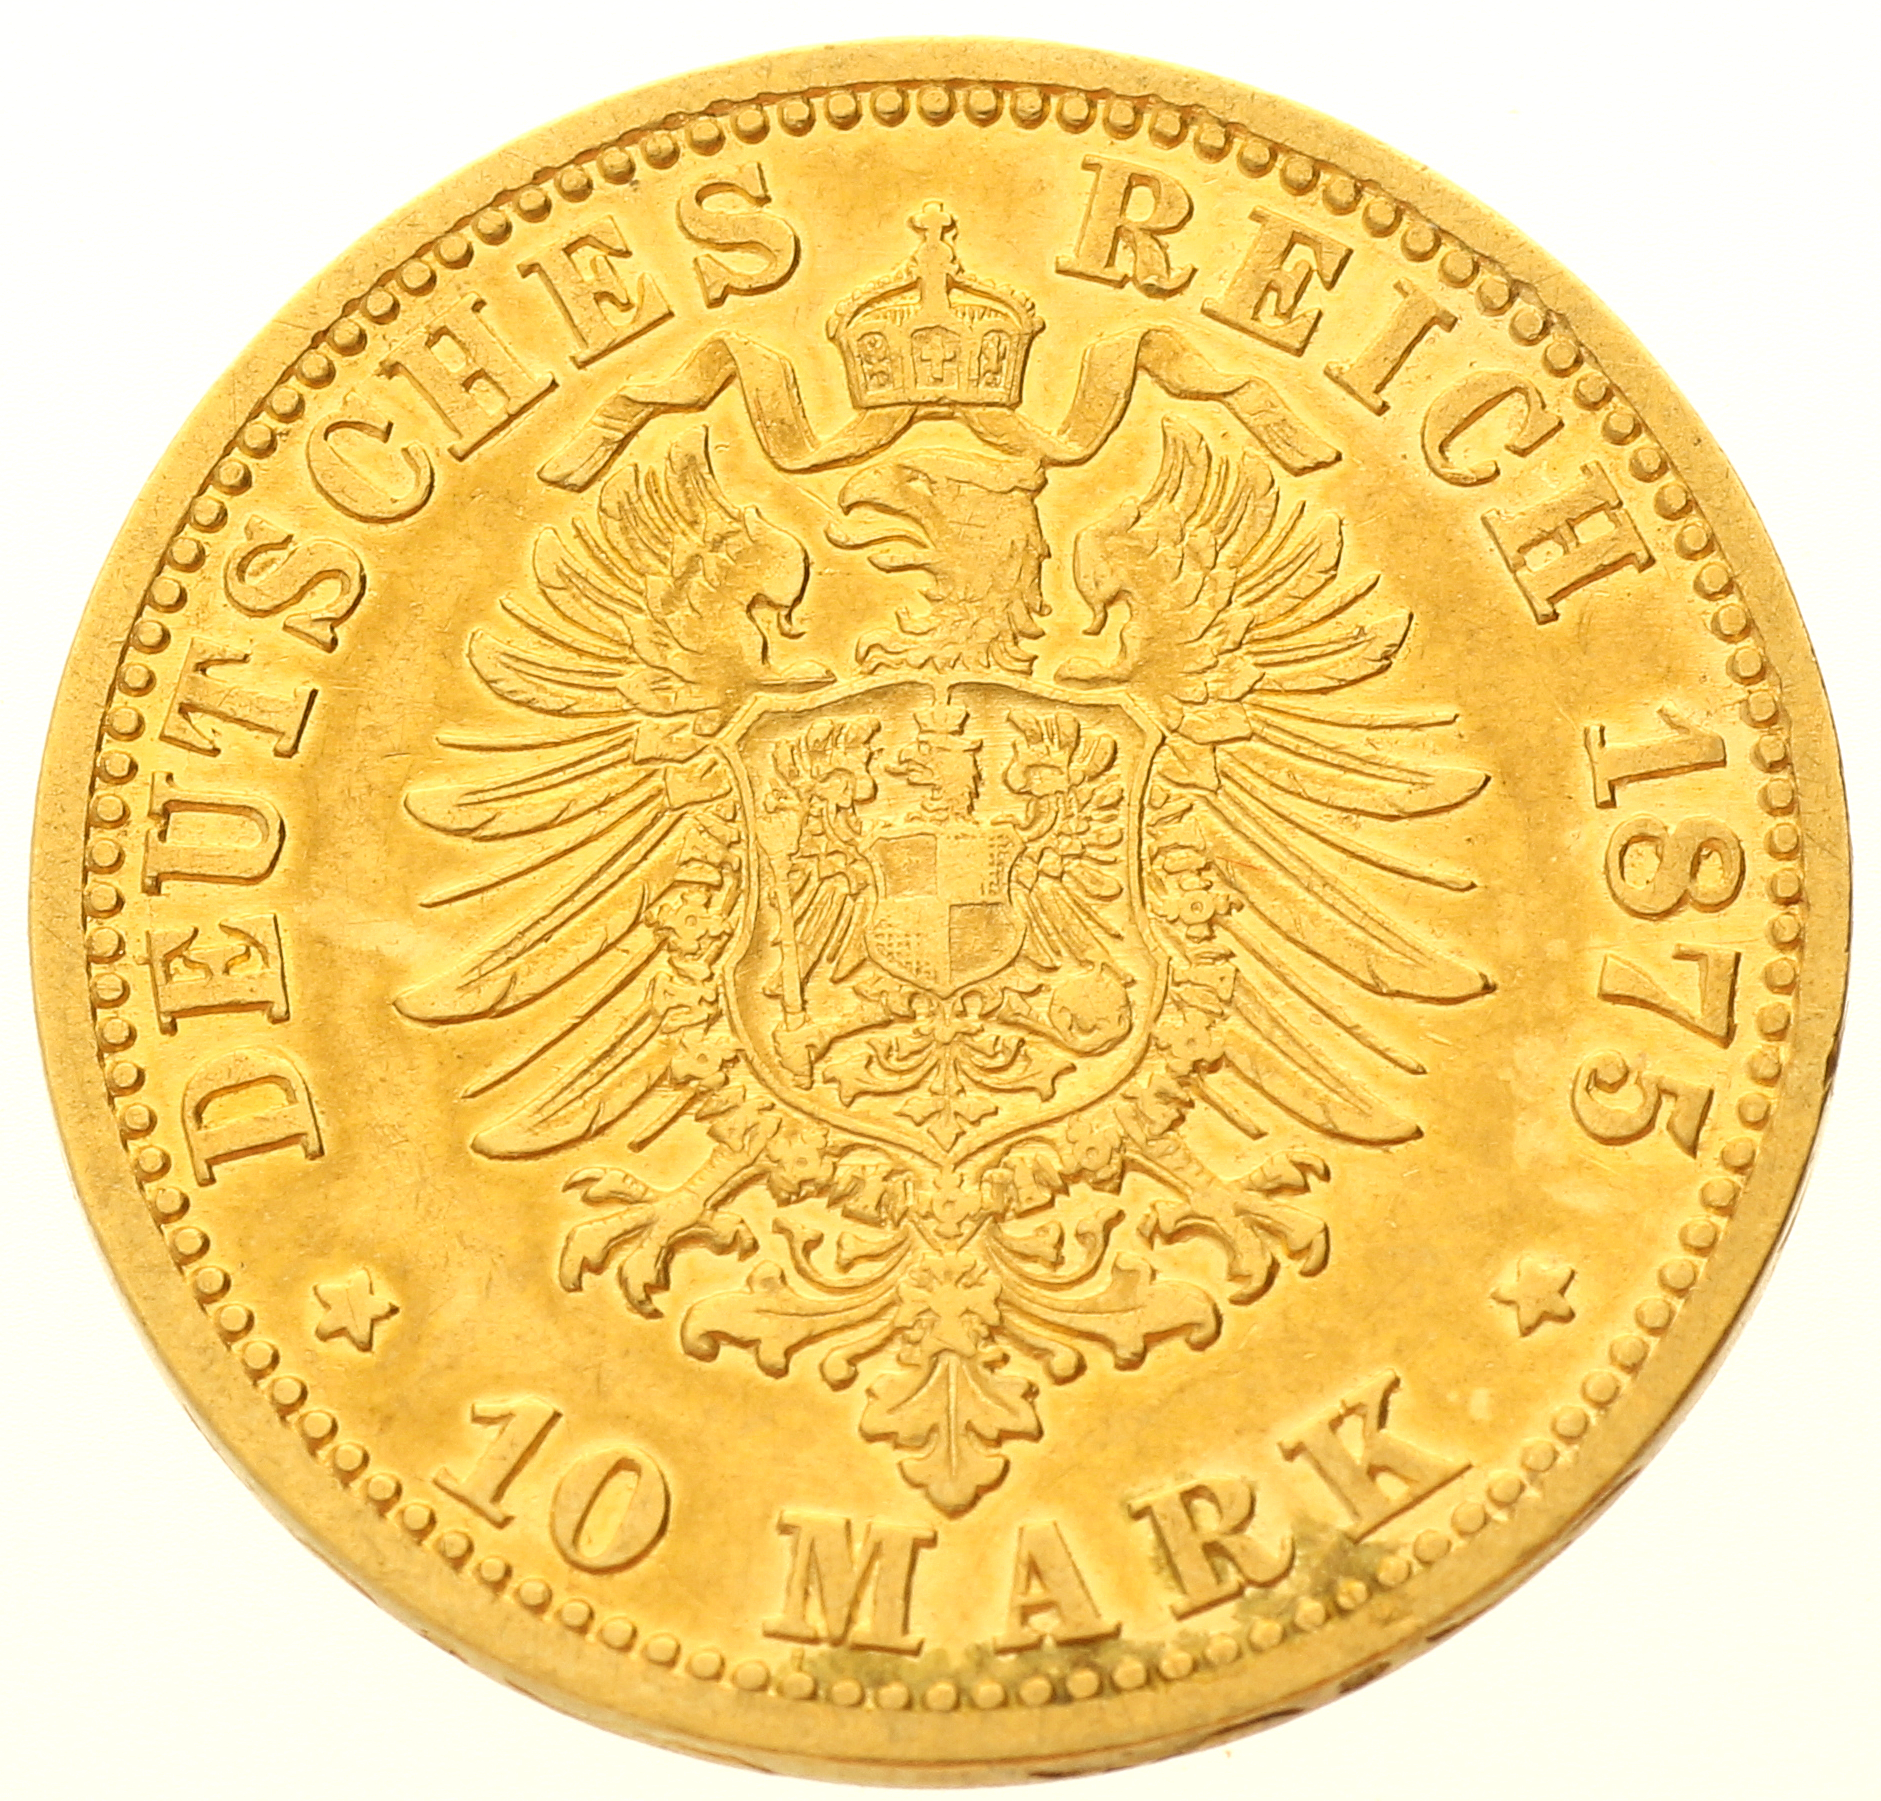 Germany - 10 mark - 1875 - A - Wilhelm I